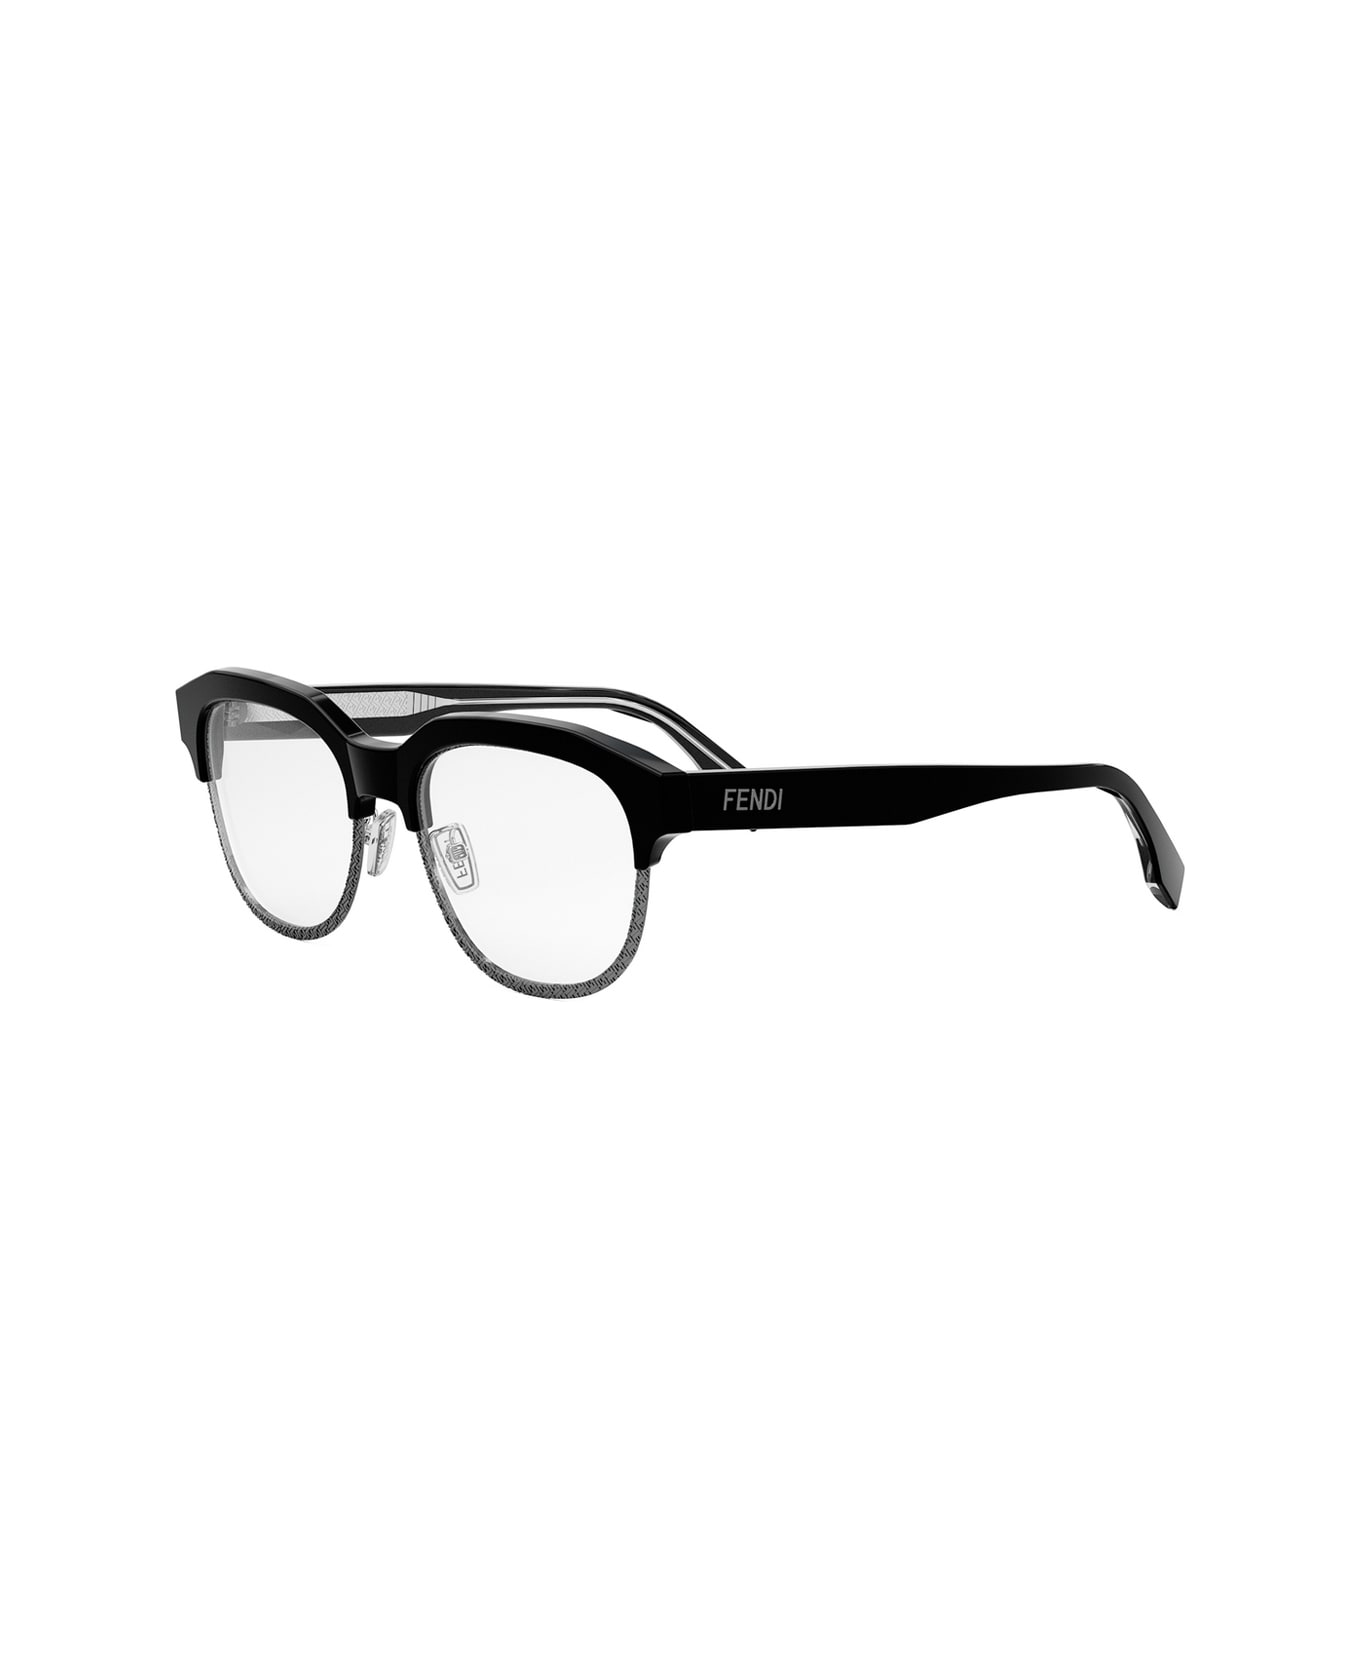 Fendi Eyewear Fe50068u 001 Glasses - Nero